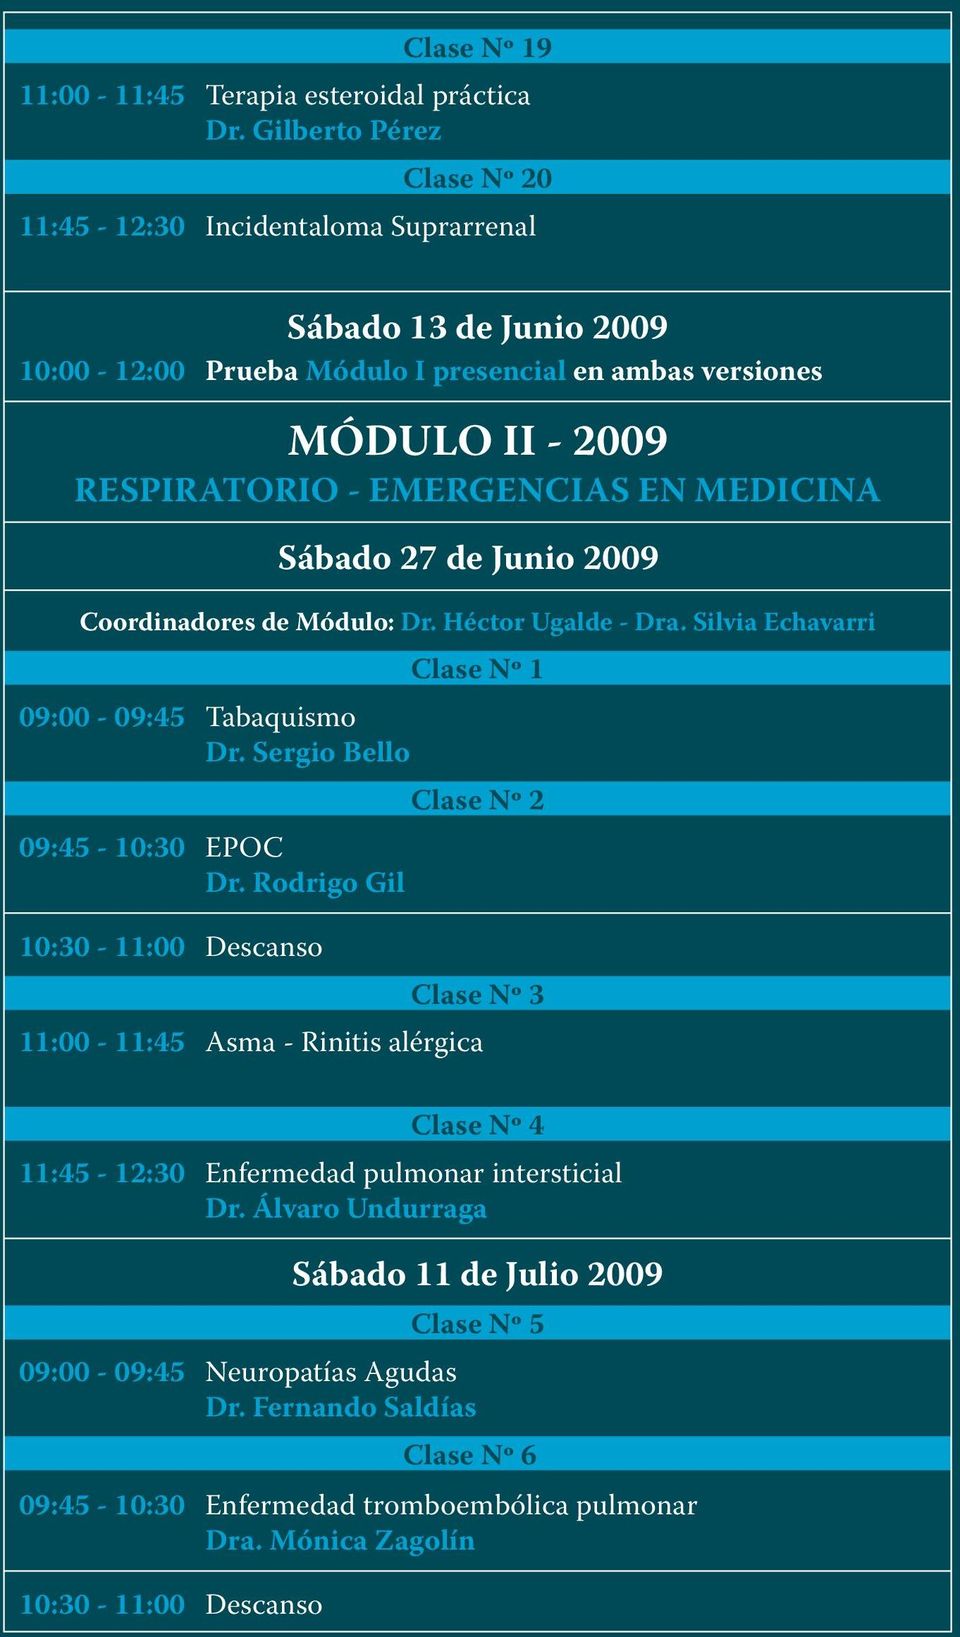 RESPIRATORIO - EMERGENCIAS EN MEDICINA Sábado 27 de Junio 2009 Coordinadores de Módulo: Dr. Héctor Ugalde - Dra. Silvia Echavarri Clase Nº 1 Tabaquismo Dr.